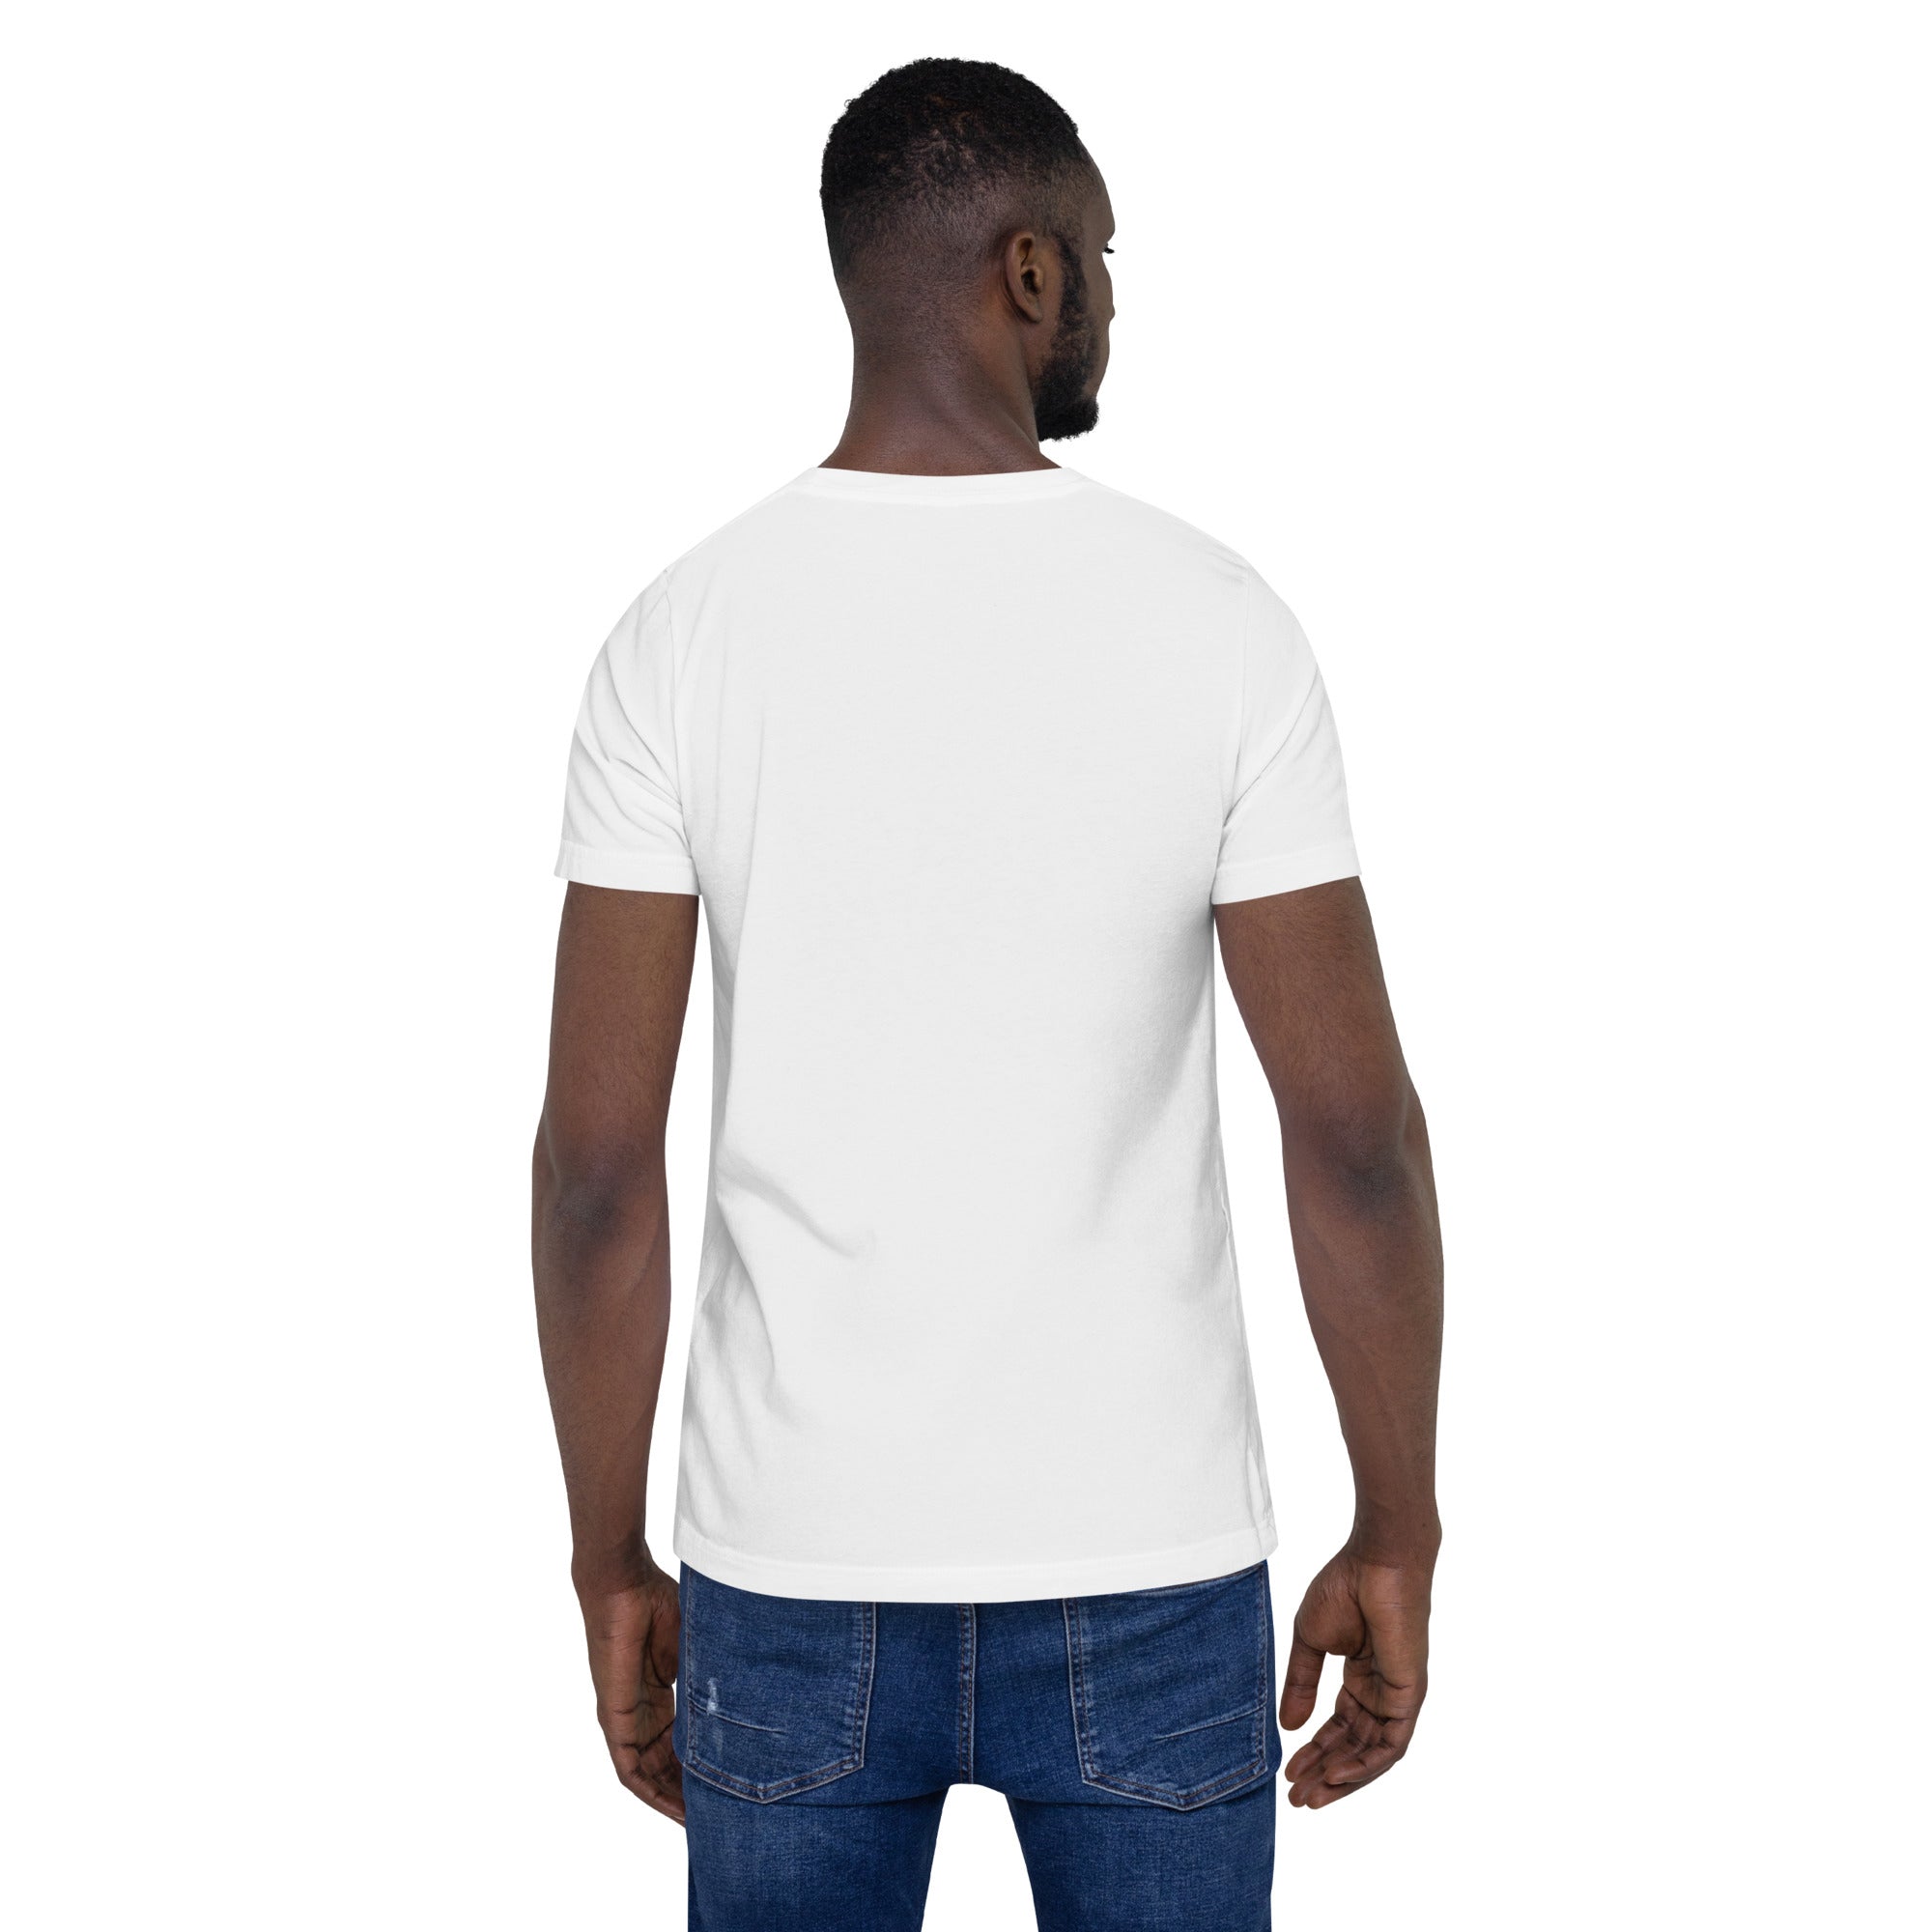 savar-mens-rolls-royce-white-t-shirt-st234-100